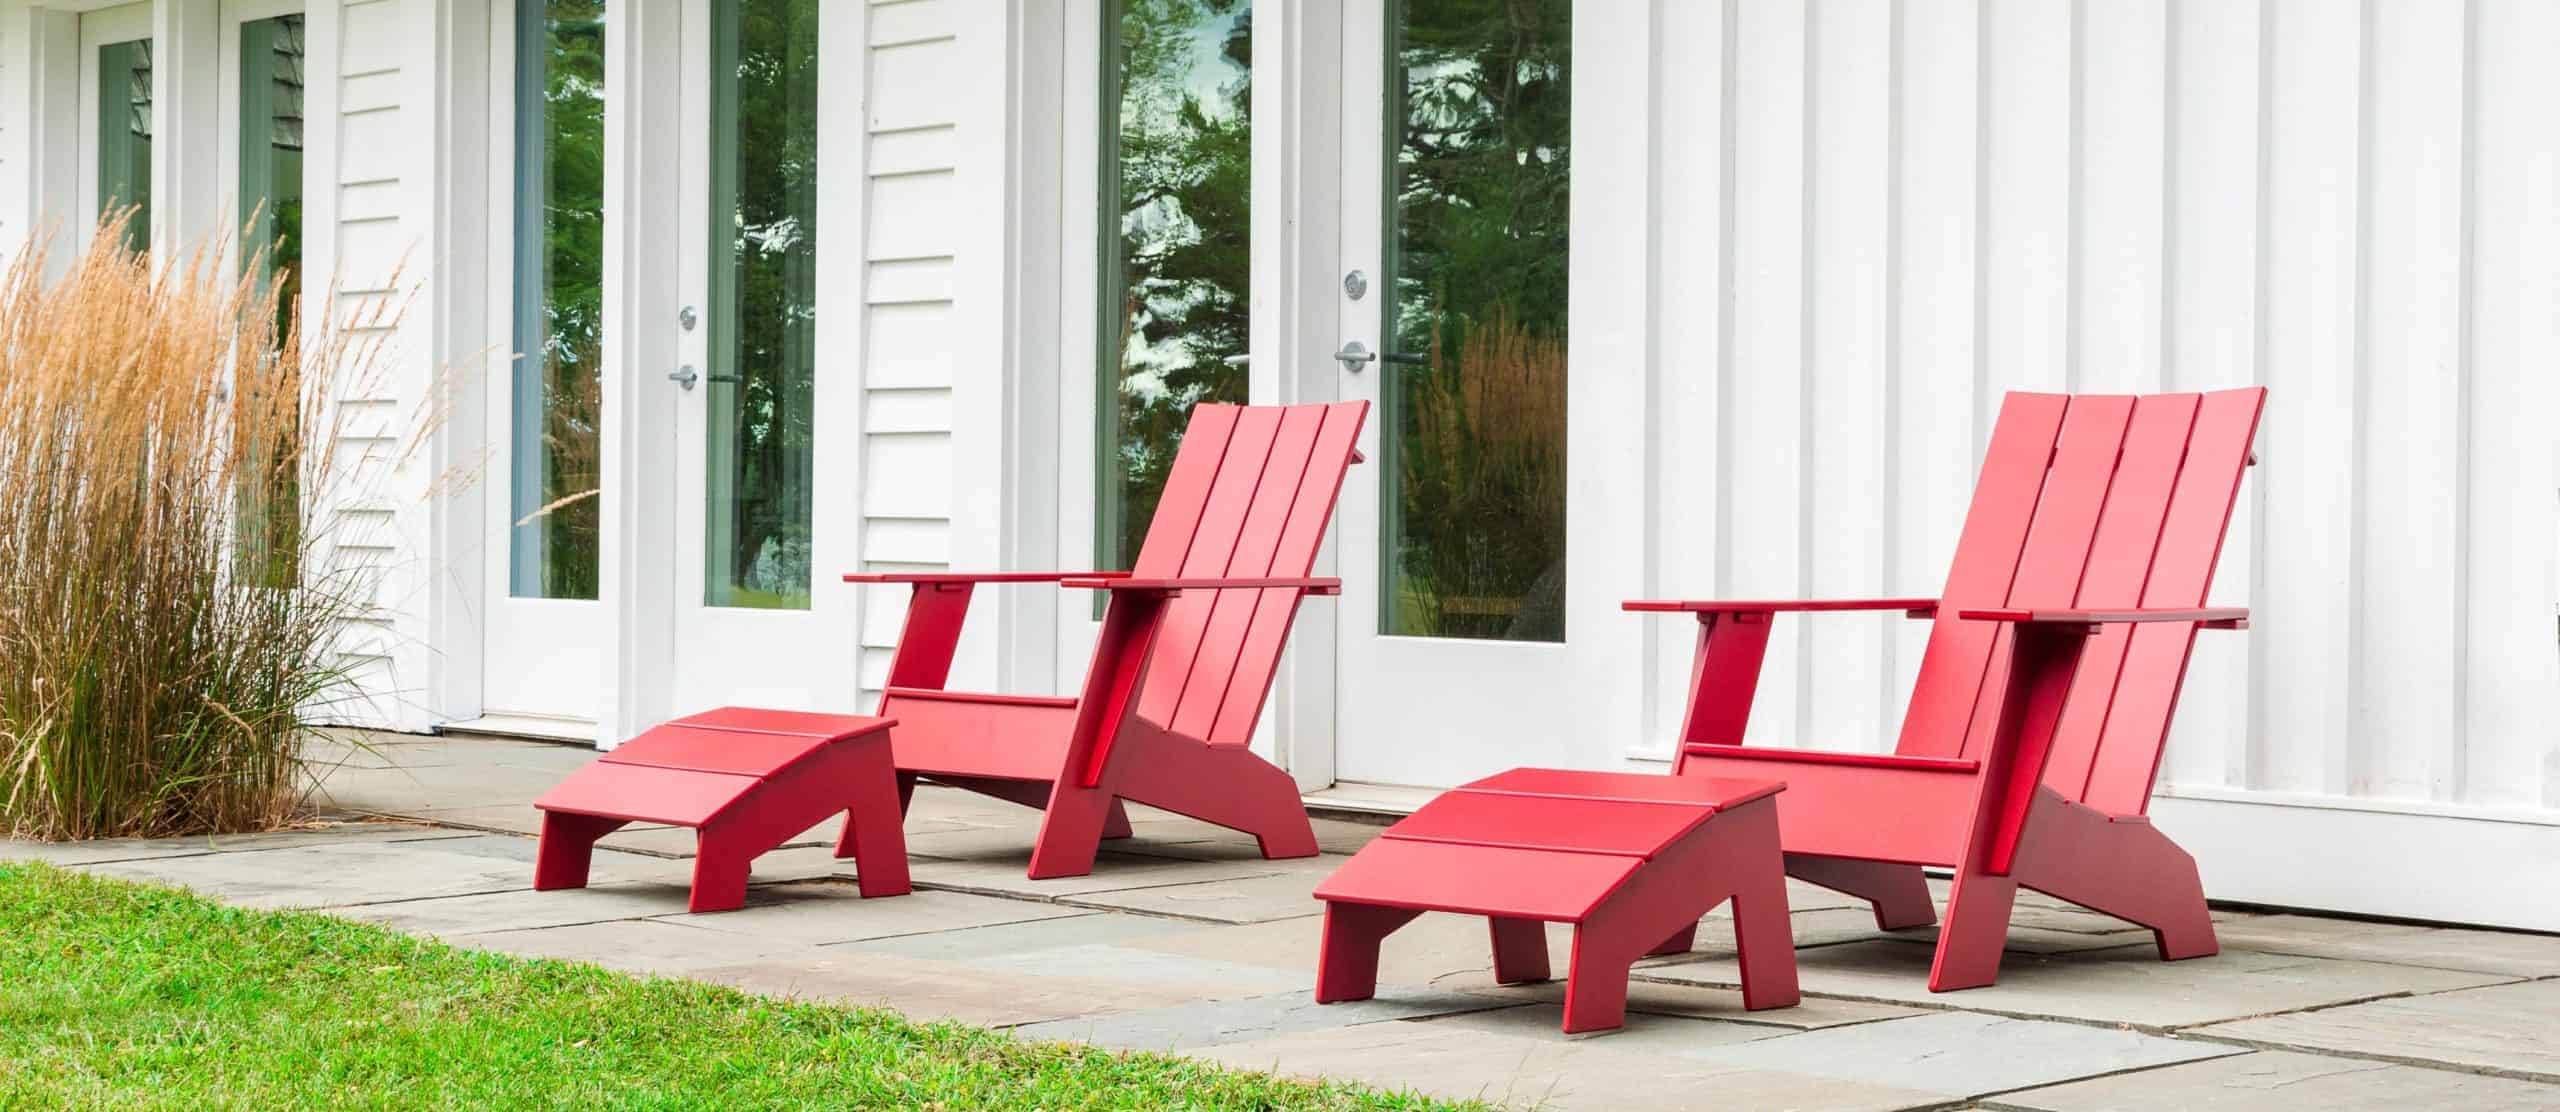 LollDesigns Adirondack Chair 4SlatFlat apple red rot mit Fussbaenken Ottomans FOTO copyright LOLL DESIGNS scaled